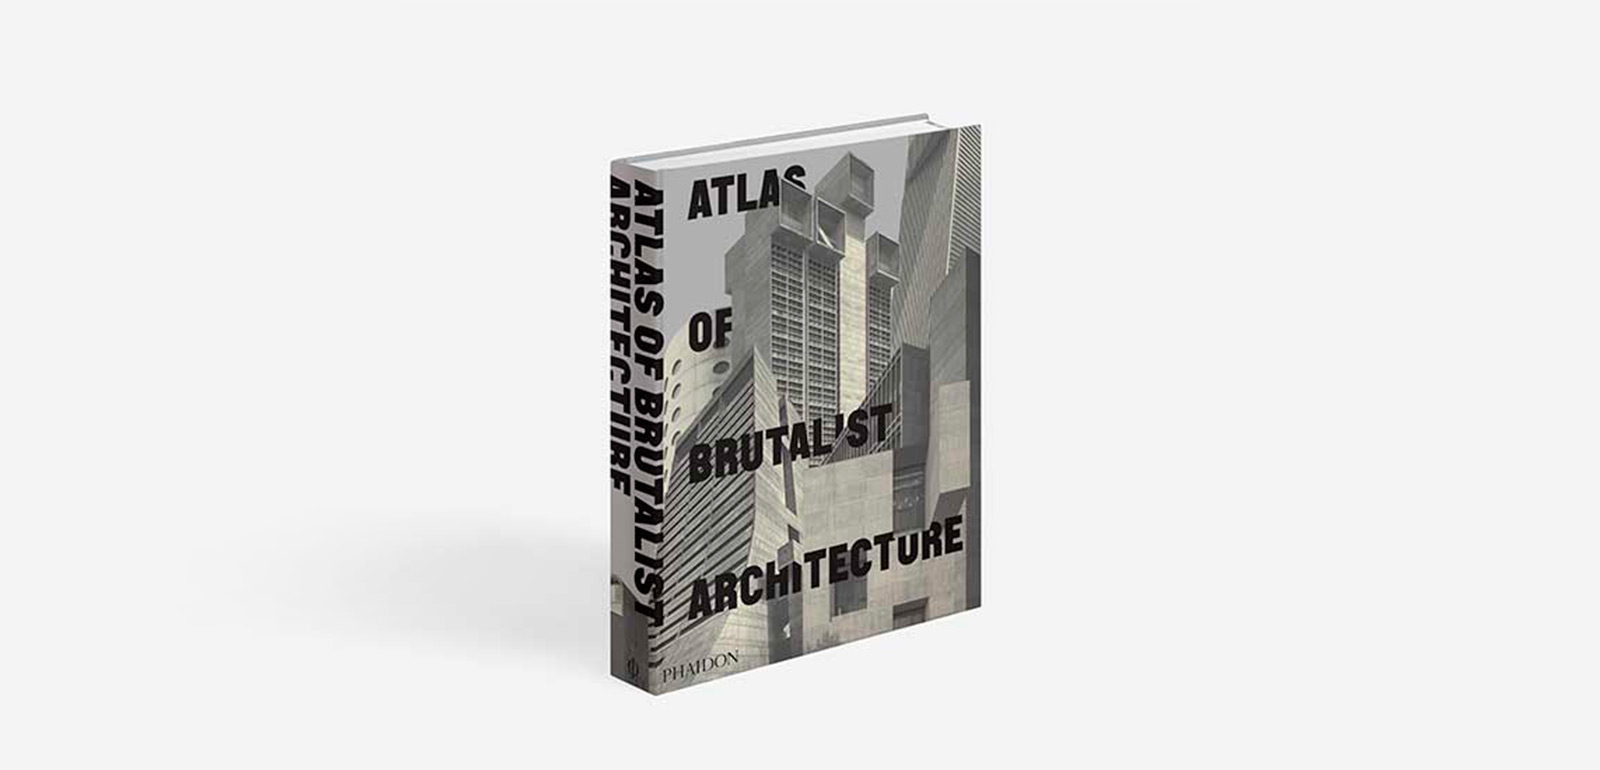 Atlas of Brutalist Architecture